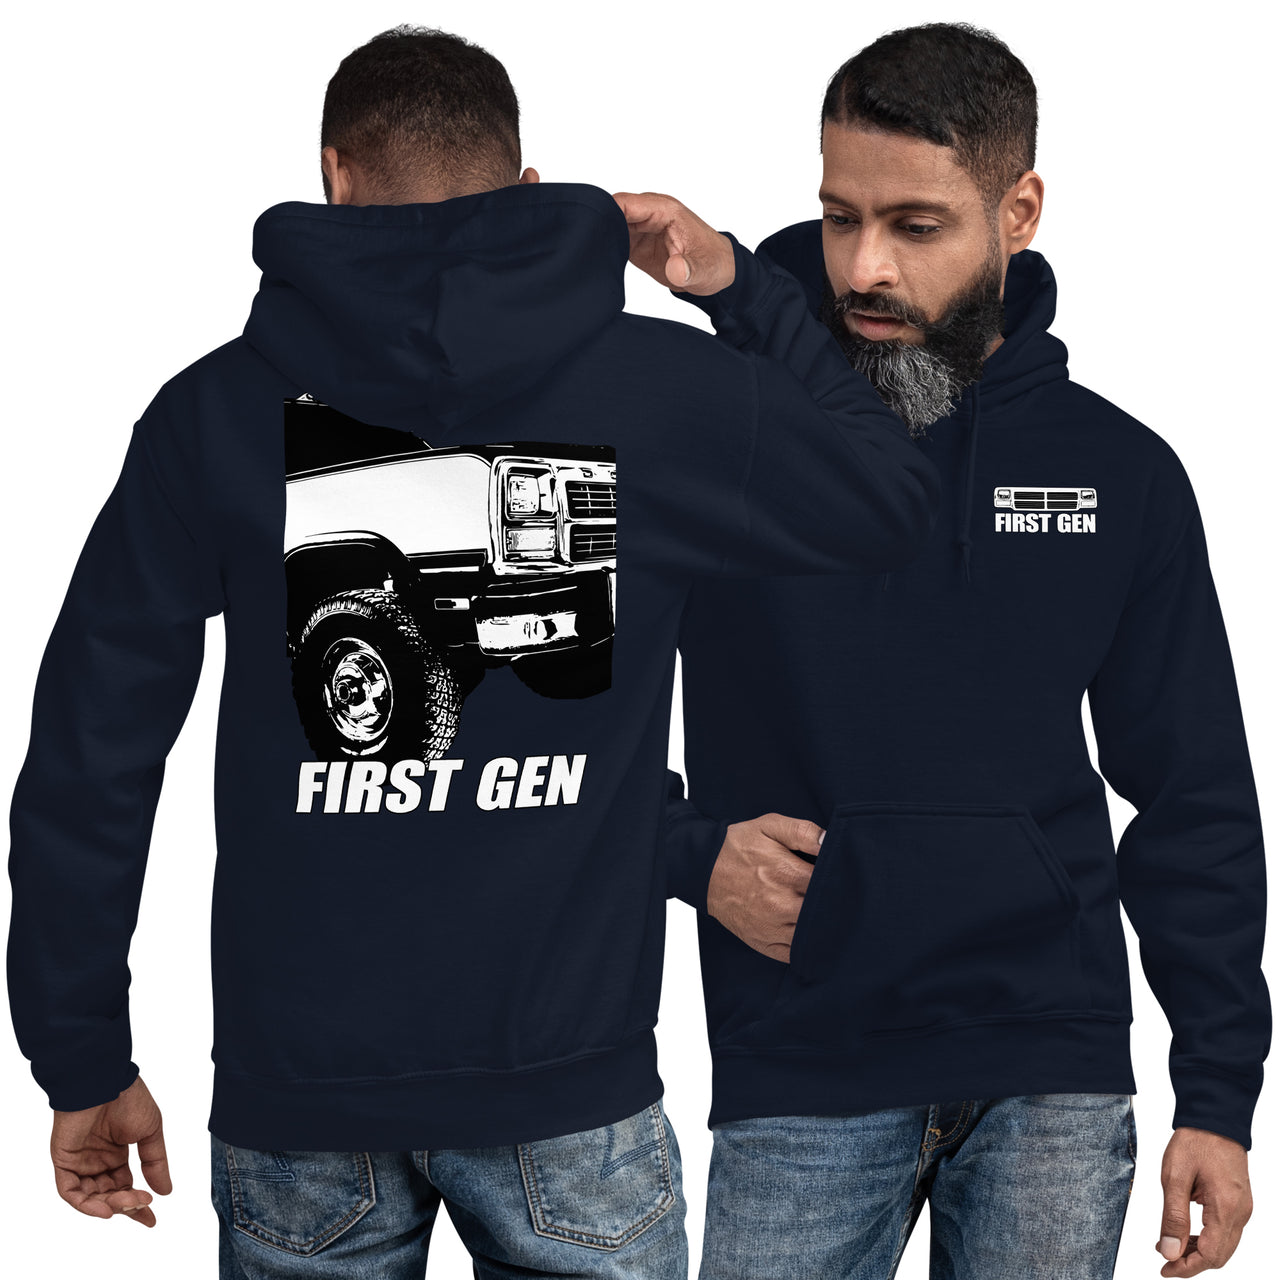 First Gen Truck Hoodie Sweatshirt With Close Up Design modeled in navy